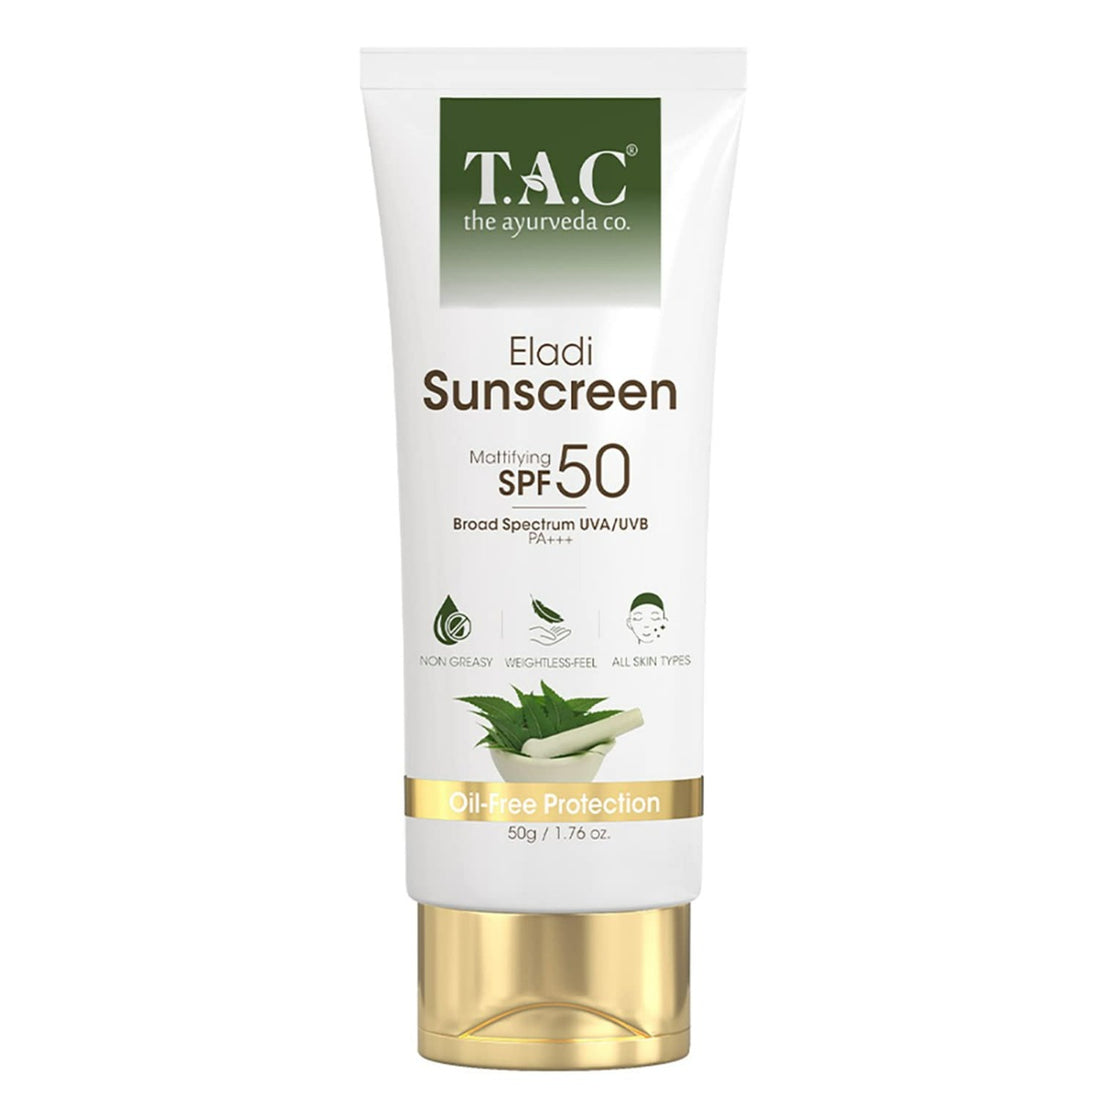 TAC - The Ayurveda Co. Eladi Sunscreen Matifying SPF 50 UVA/UVB PA+++ (50gm)